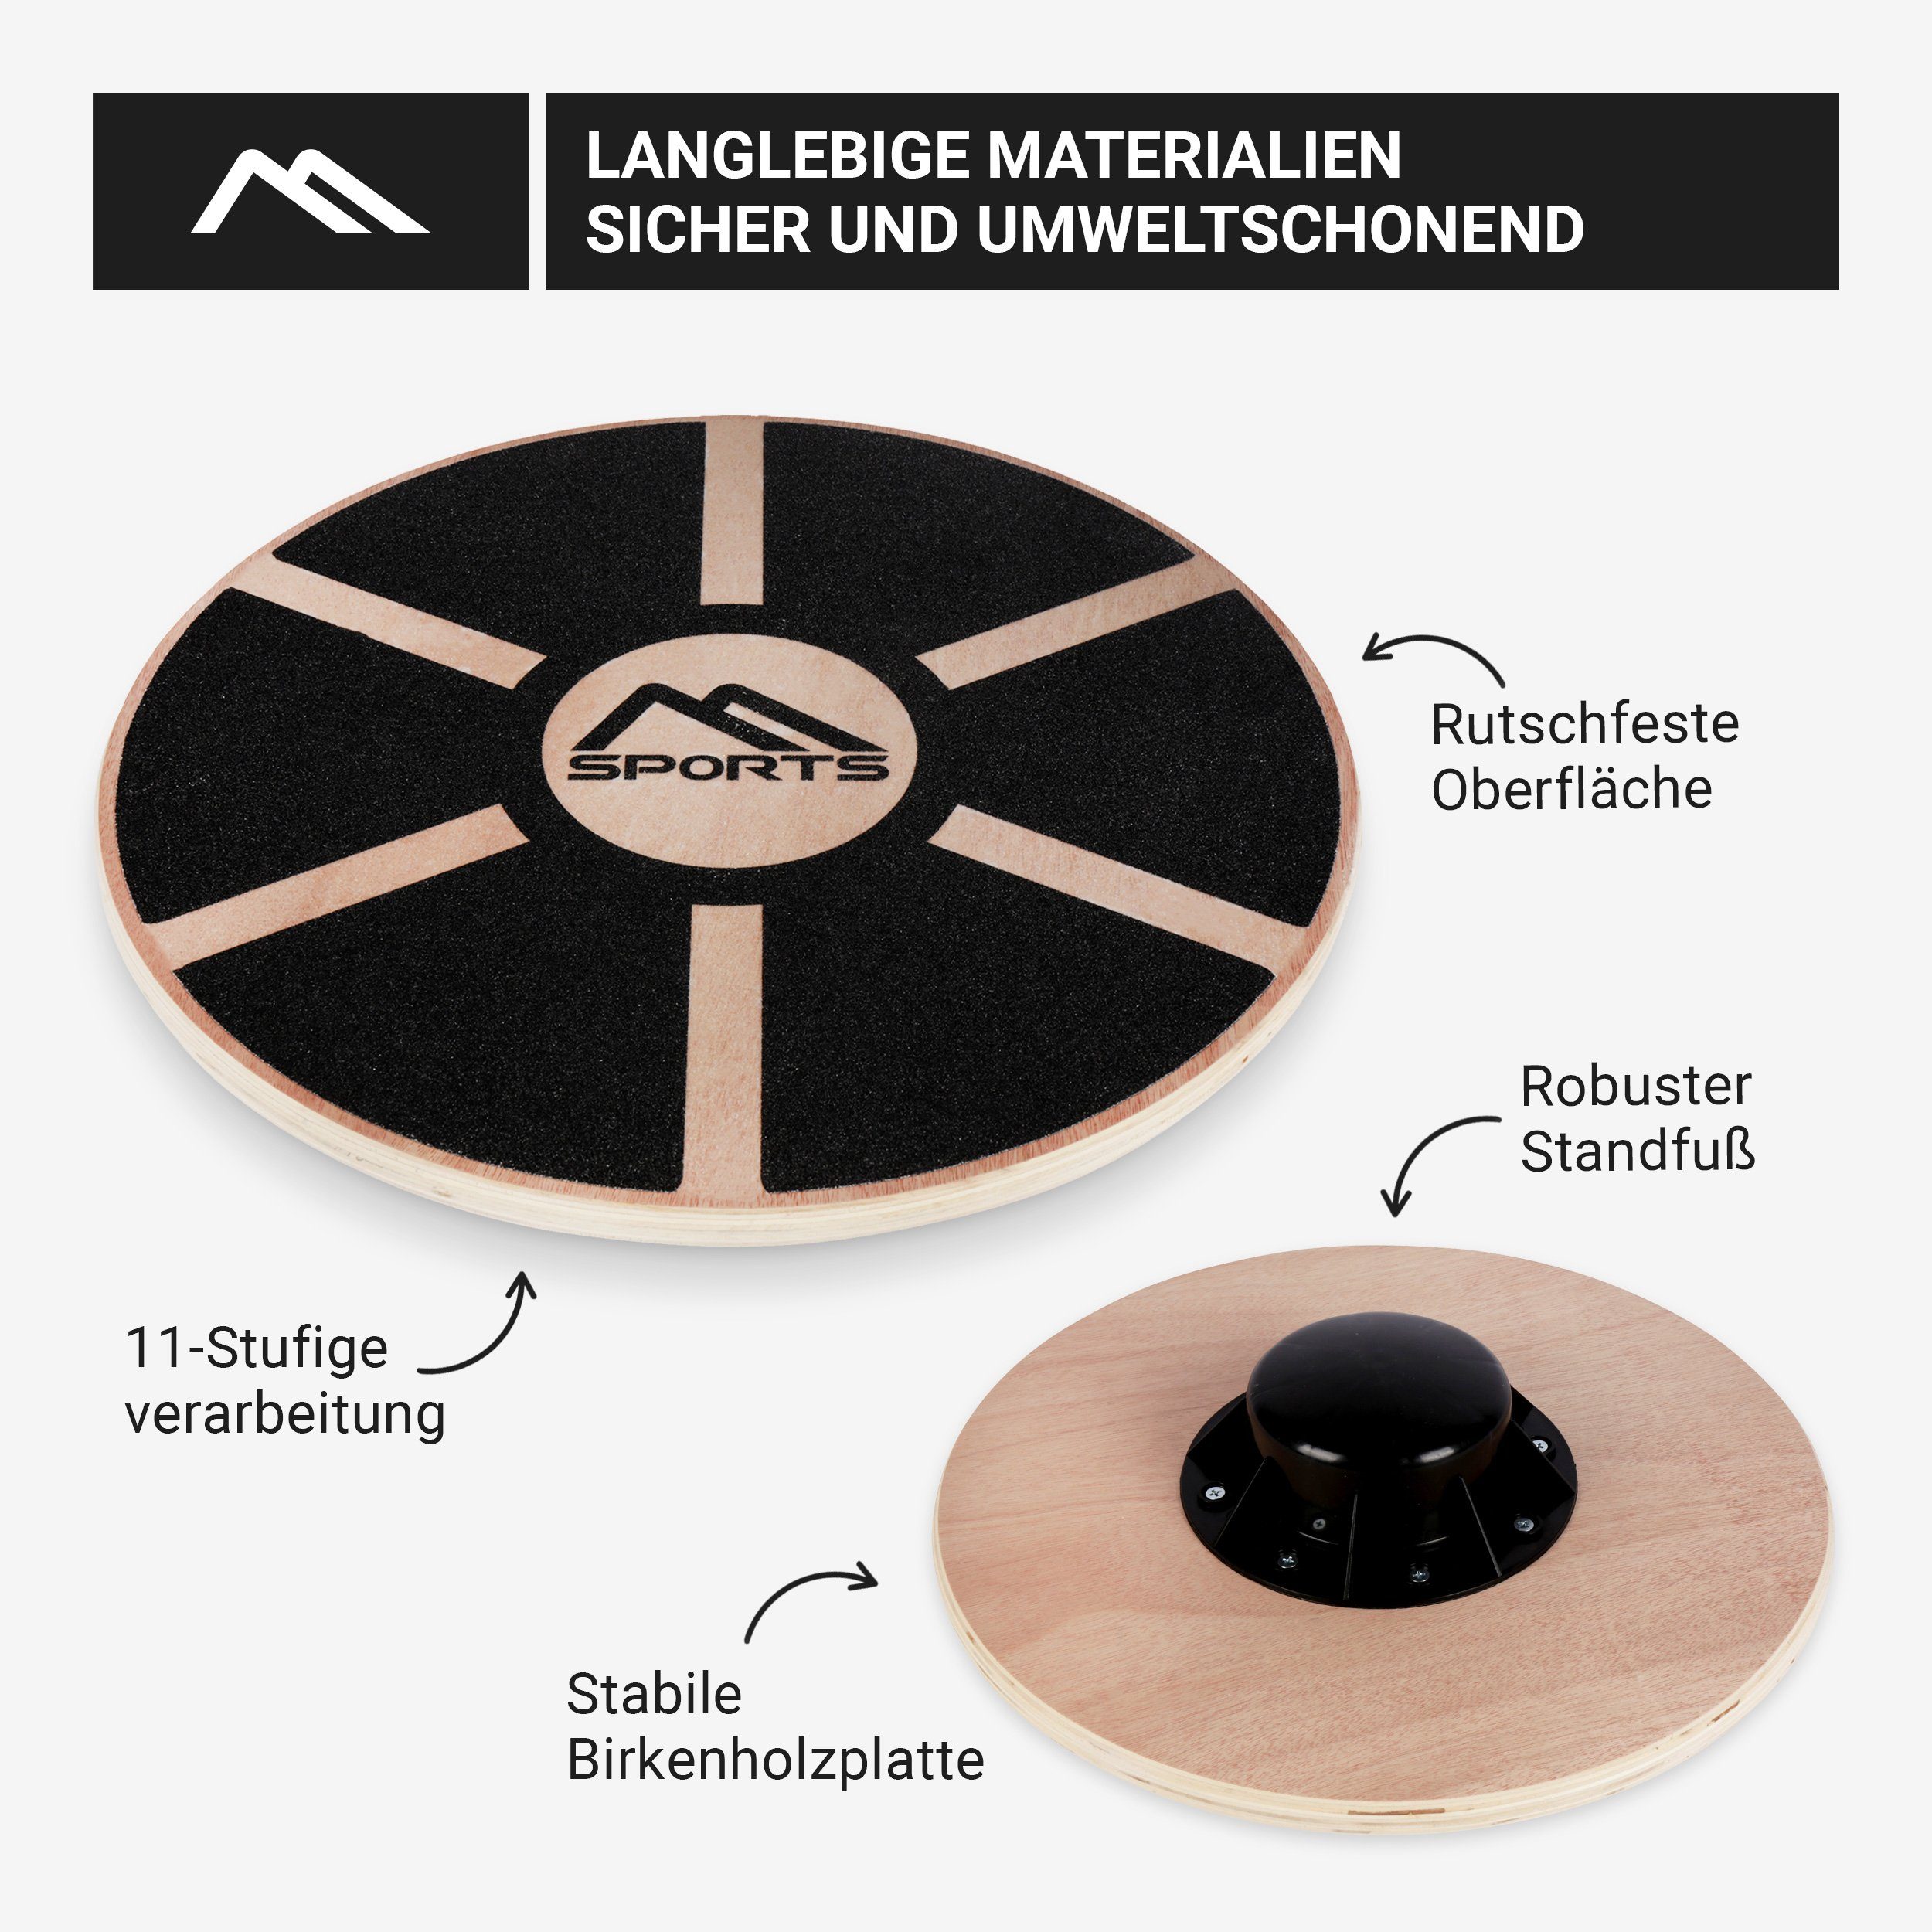 39 Durchmesser Board Wackelbrett aus cm MSports® Stabilisations-Therapiegerät Balance Holz